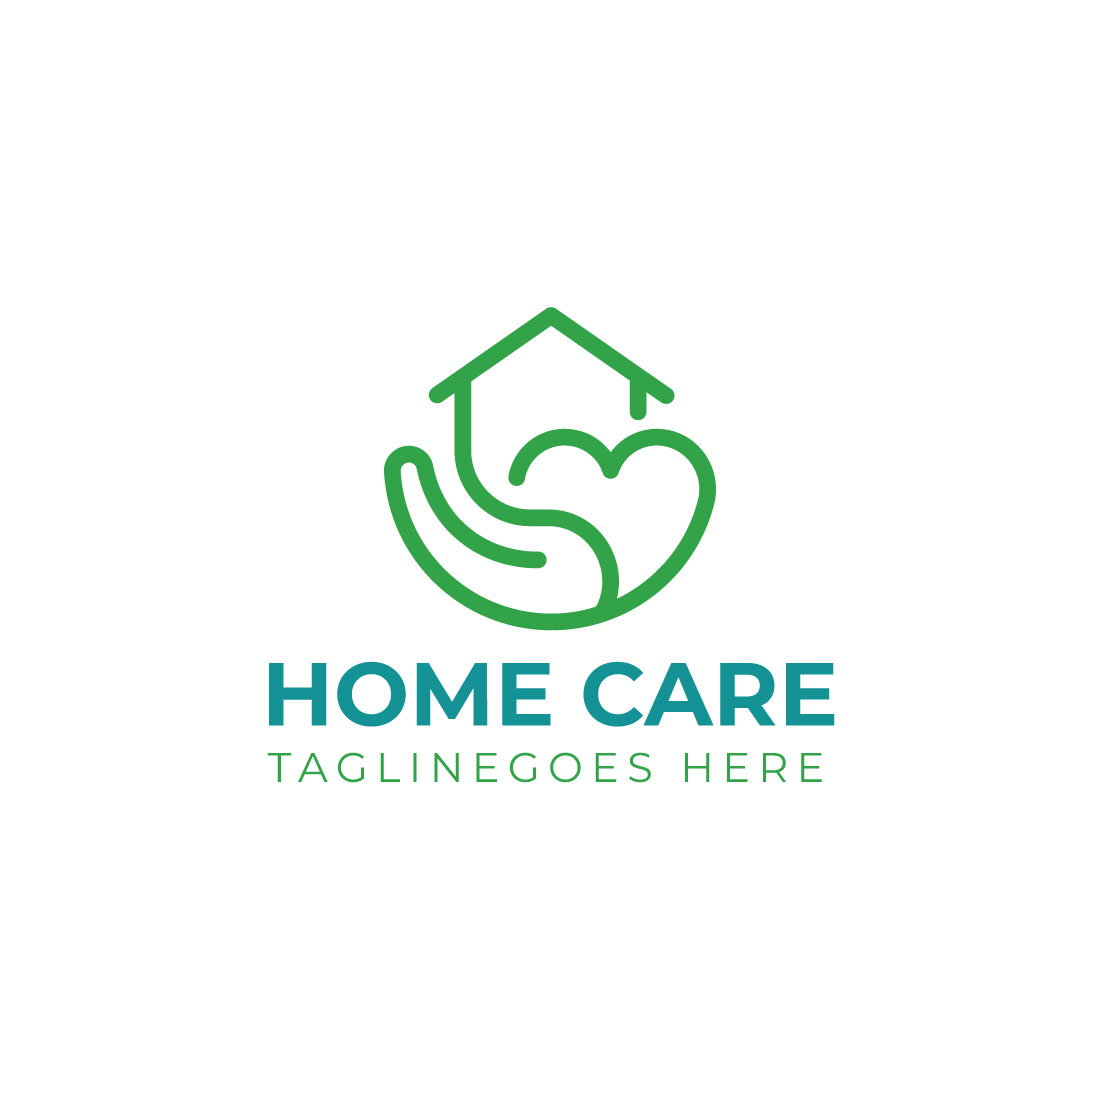 Home care logo design vector template illustration design preview image.